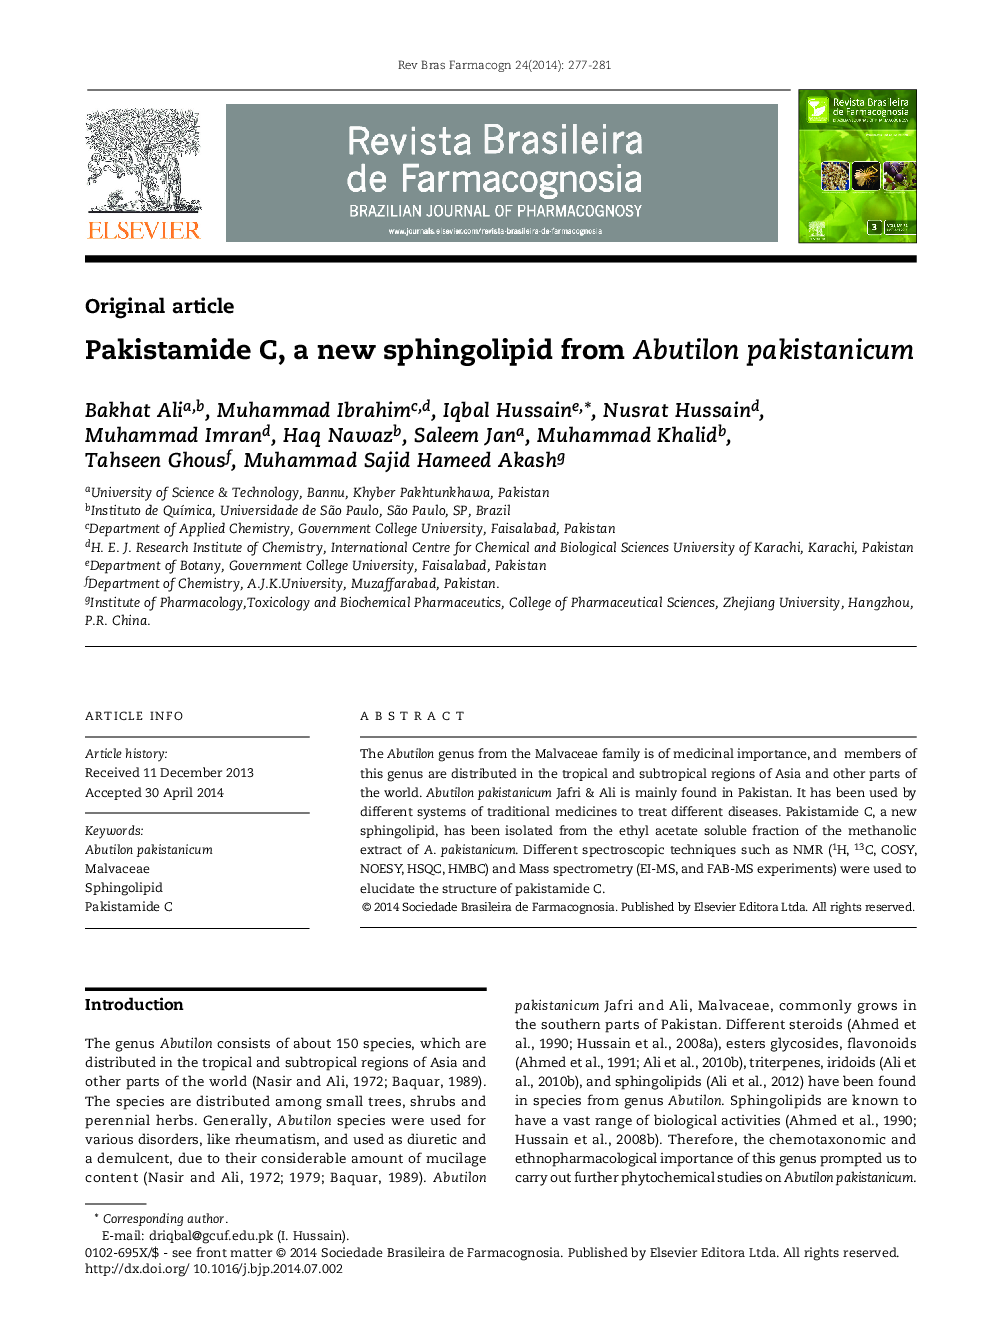 Pakistamide C, a new sphingolipid from Abutilon pakistanicum